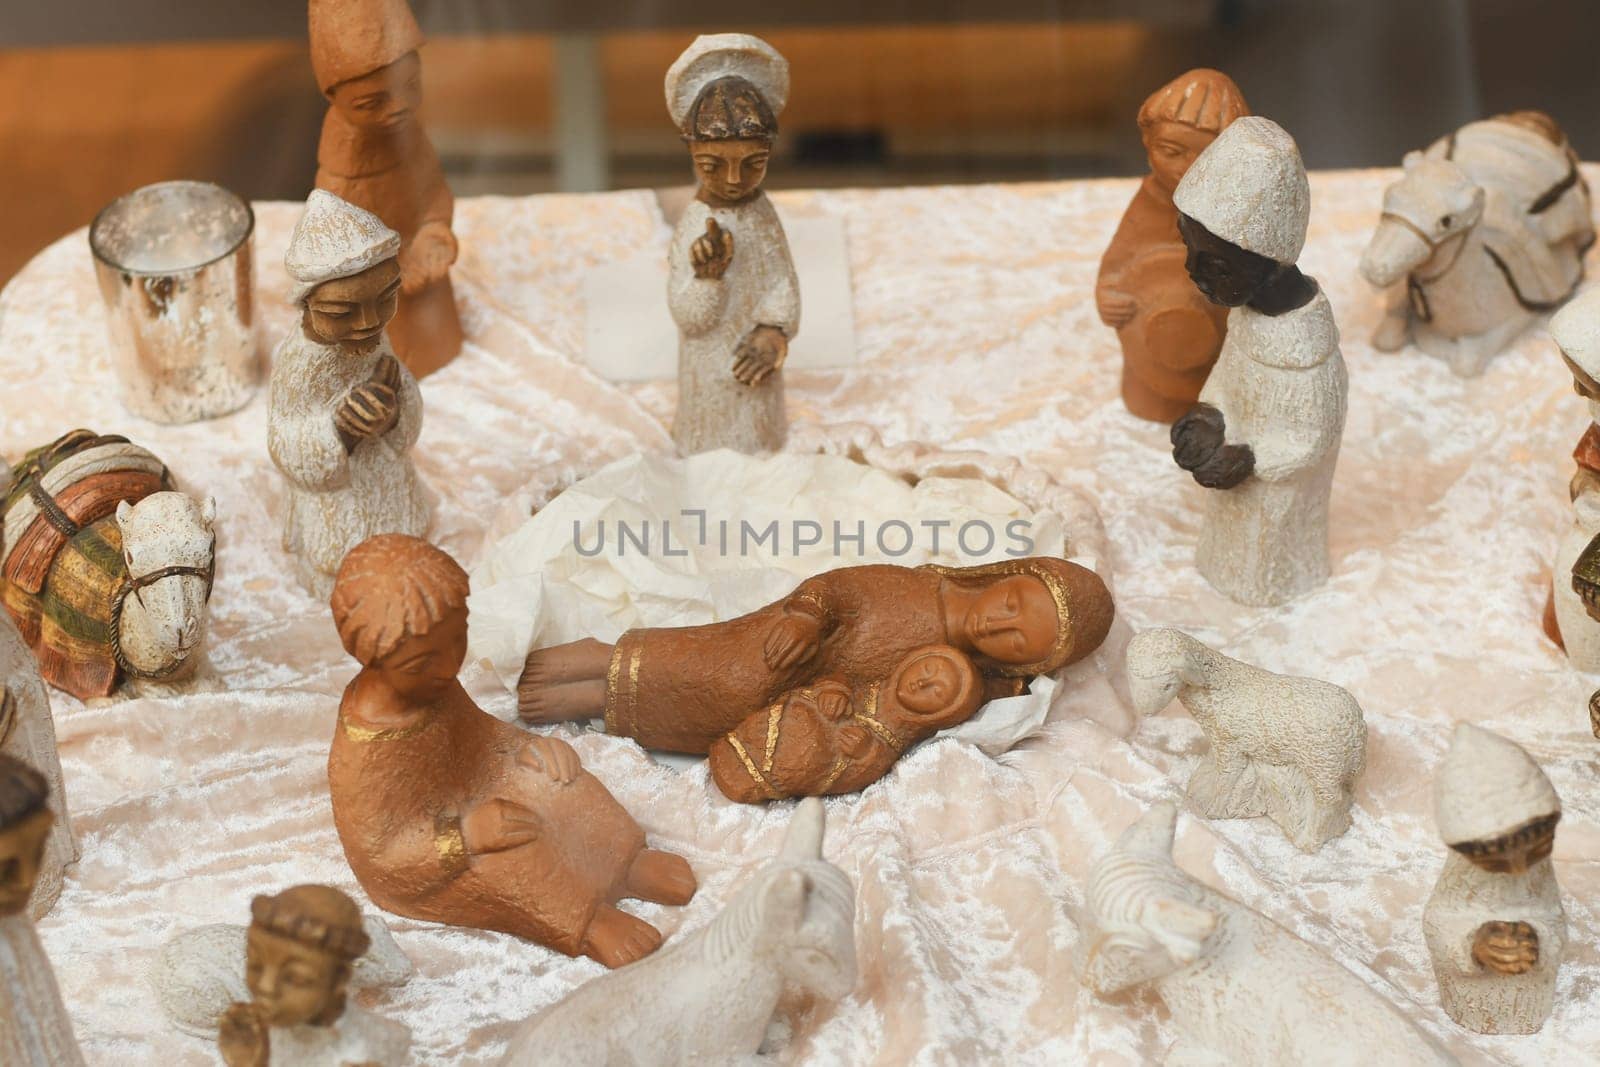 Ceramic figurines of Joseph Mary and Jesus Christmas nativity scene